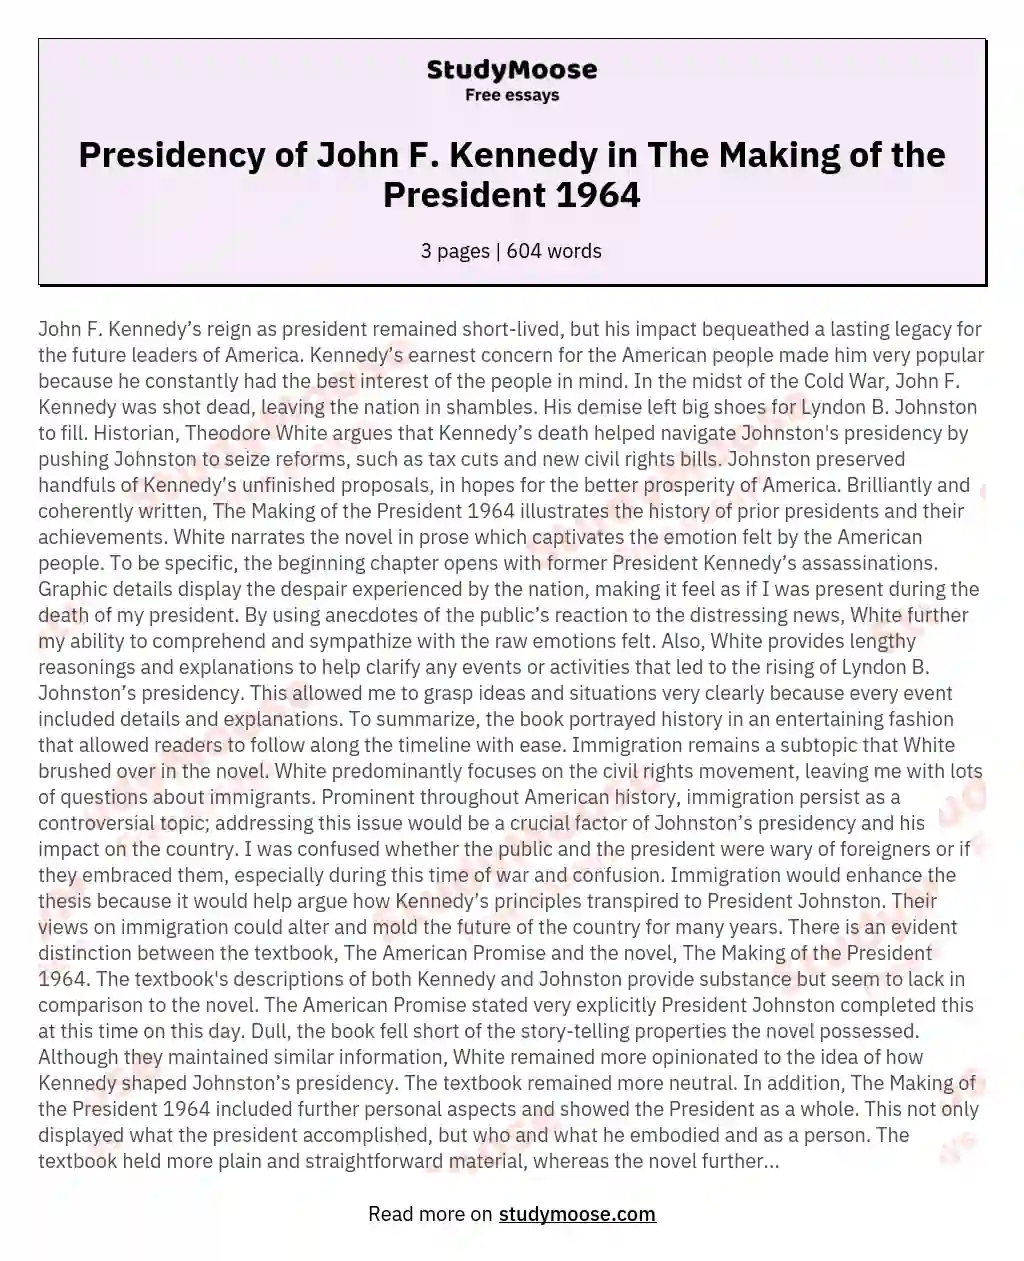 Presidency of John F. Kennedy in The Making of the President 1964 essay